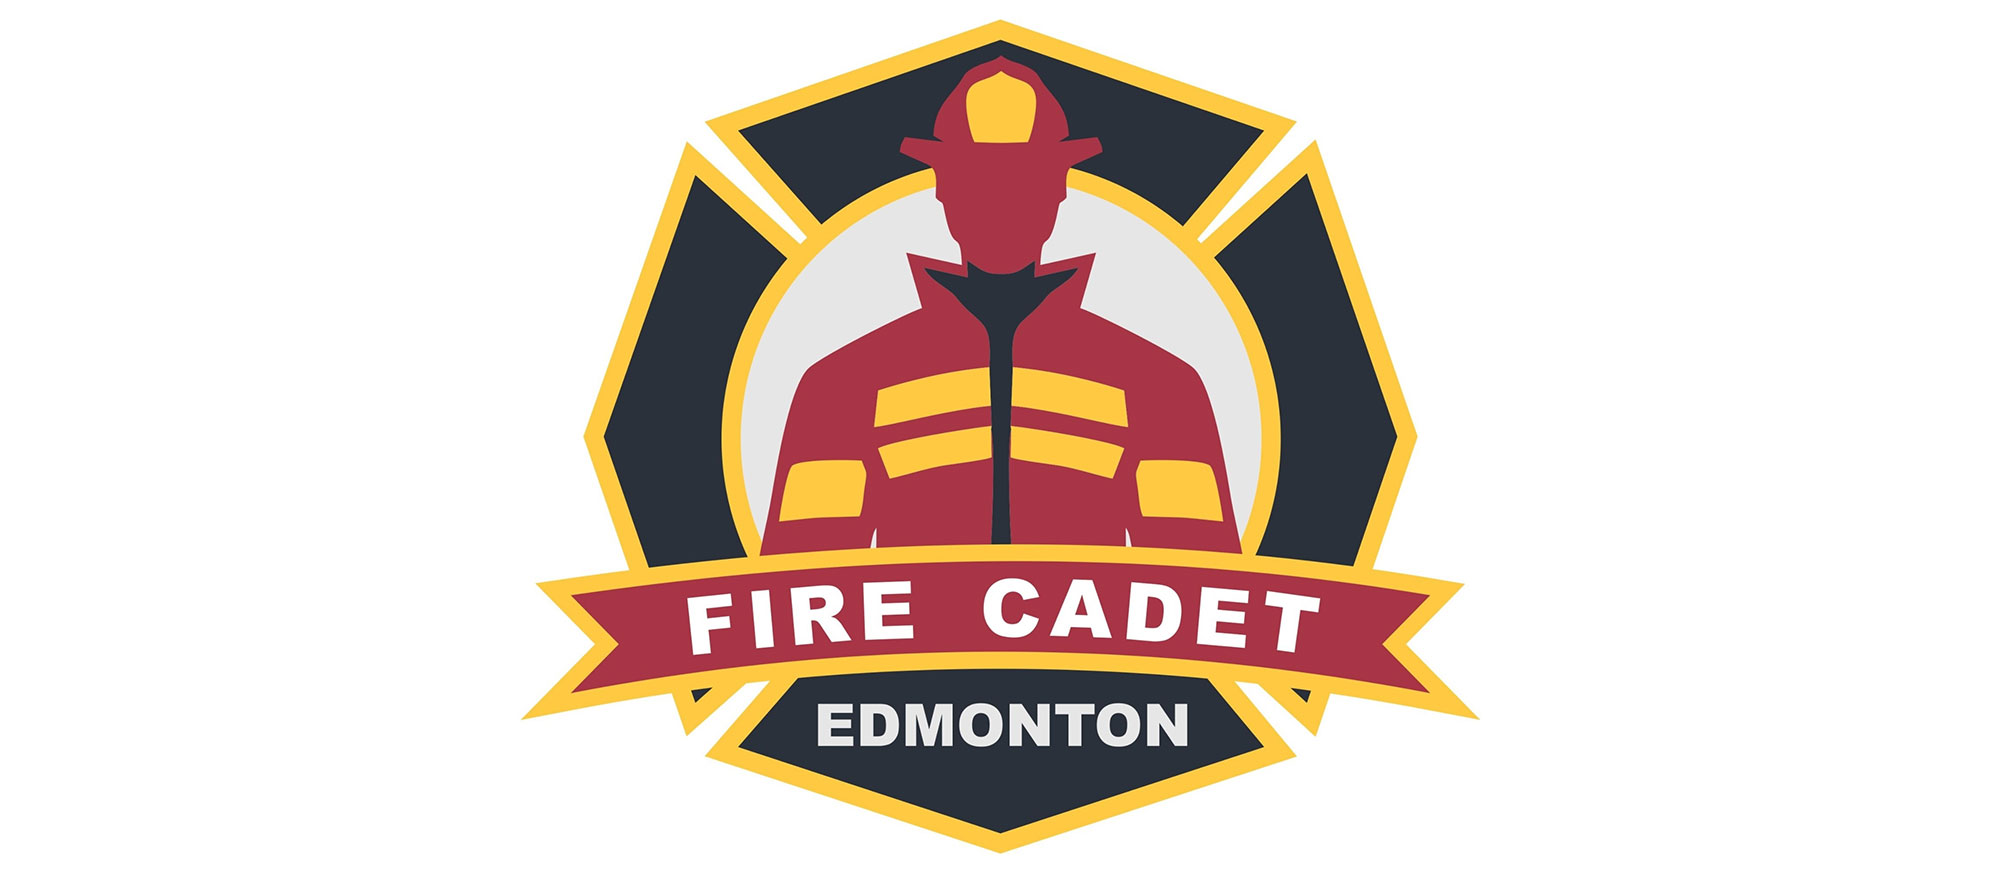 Edmonton fire cadet logo